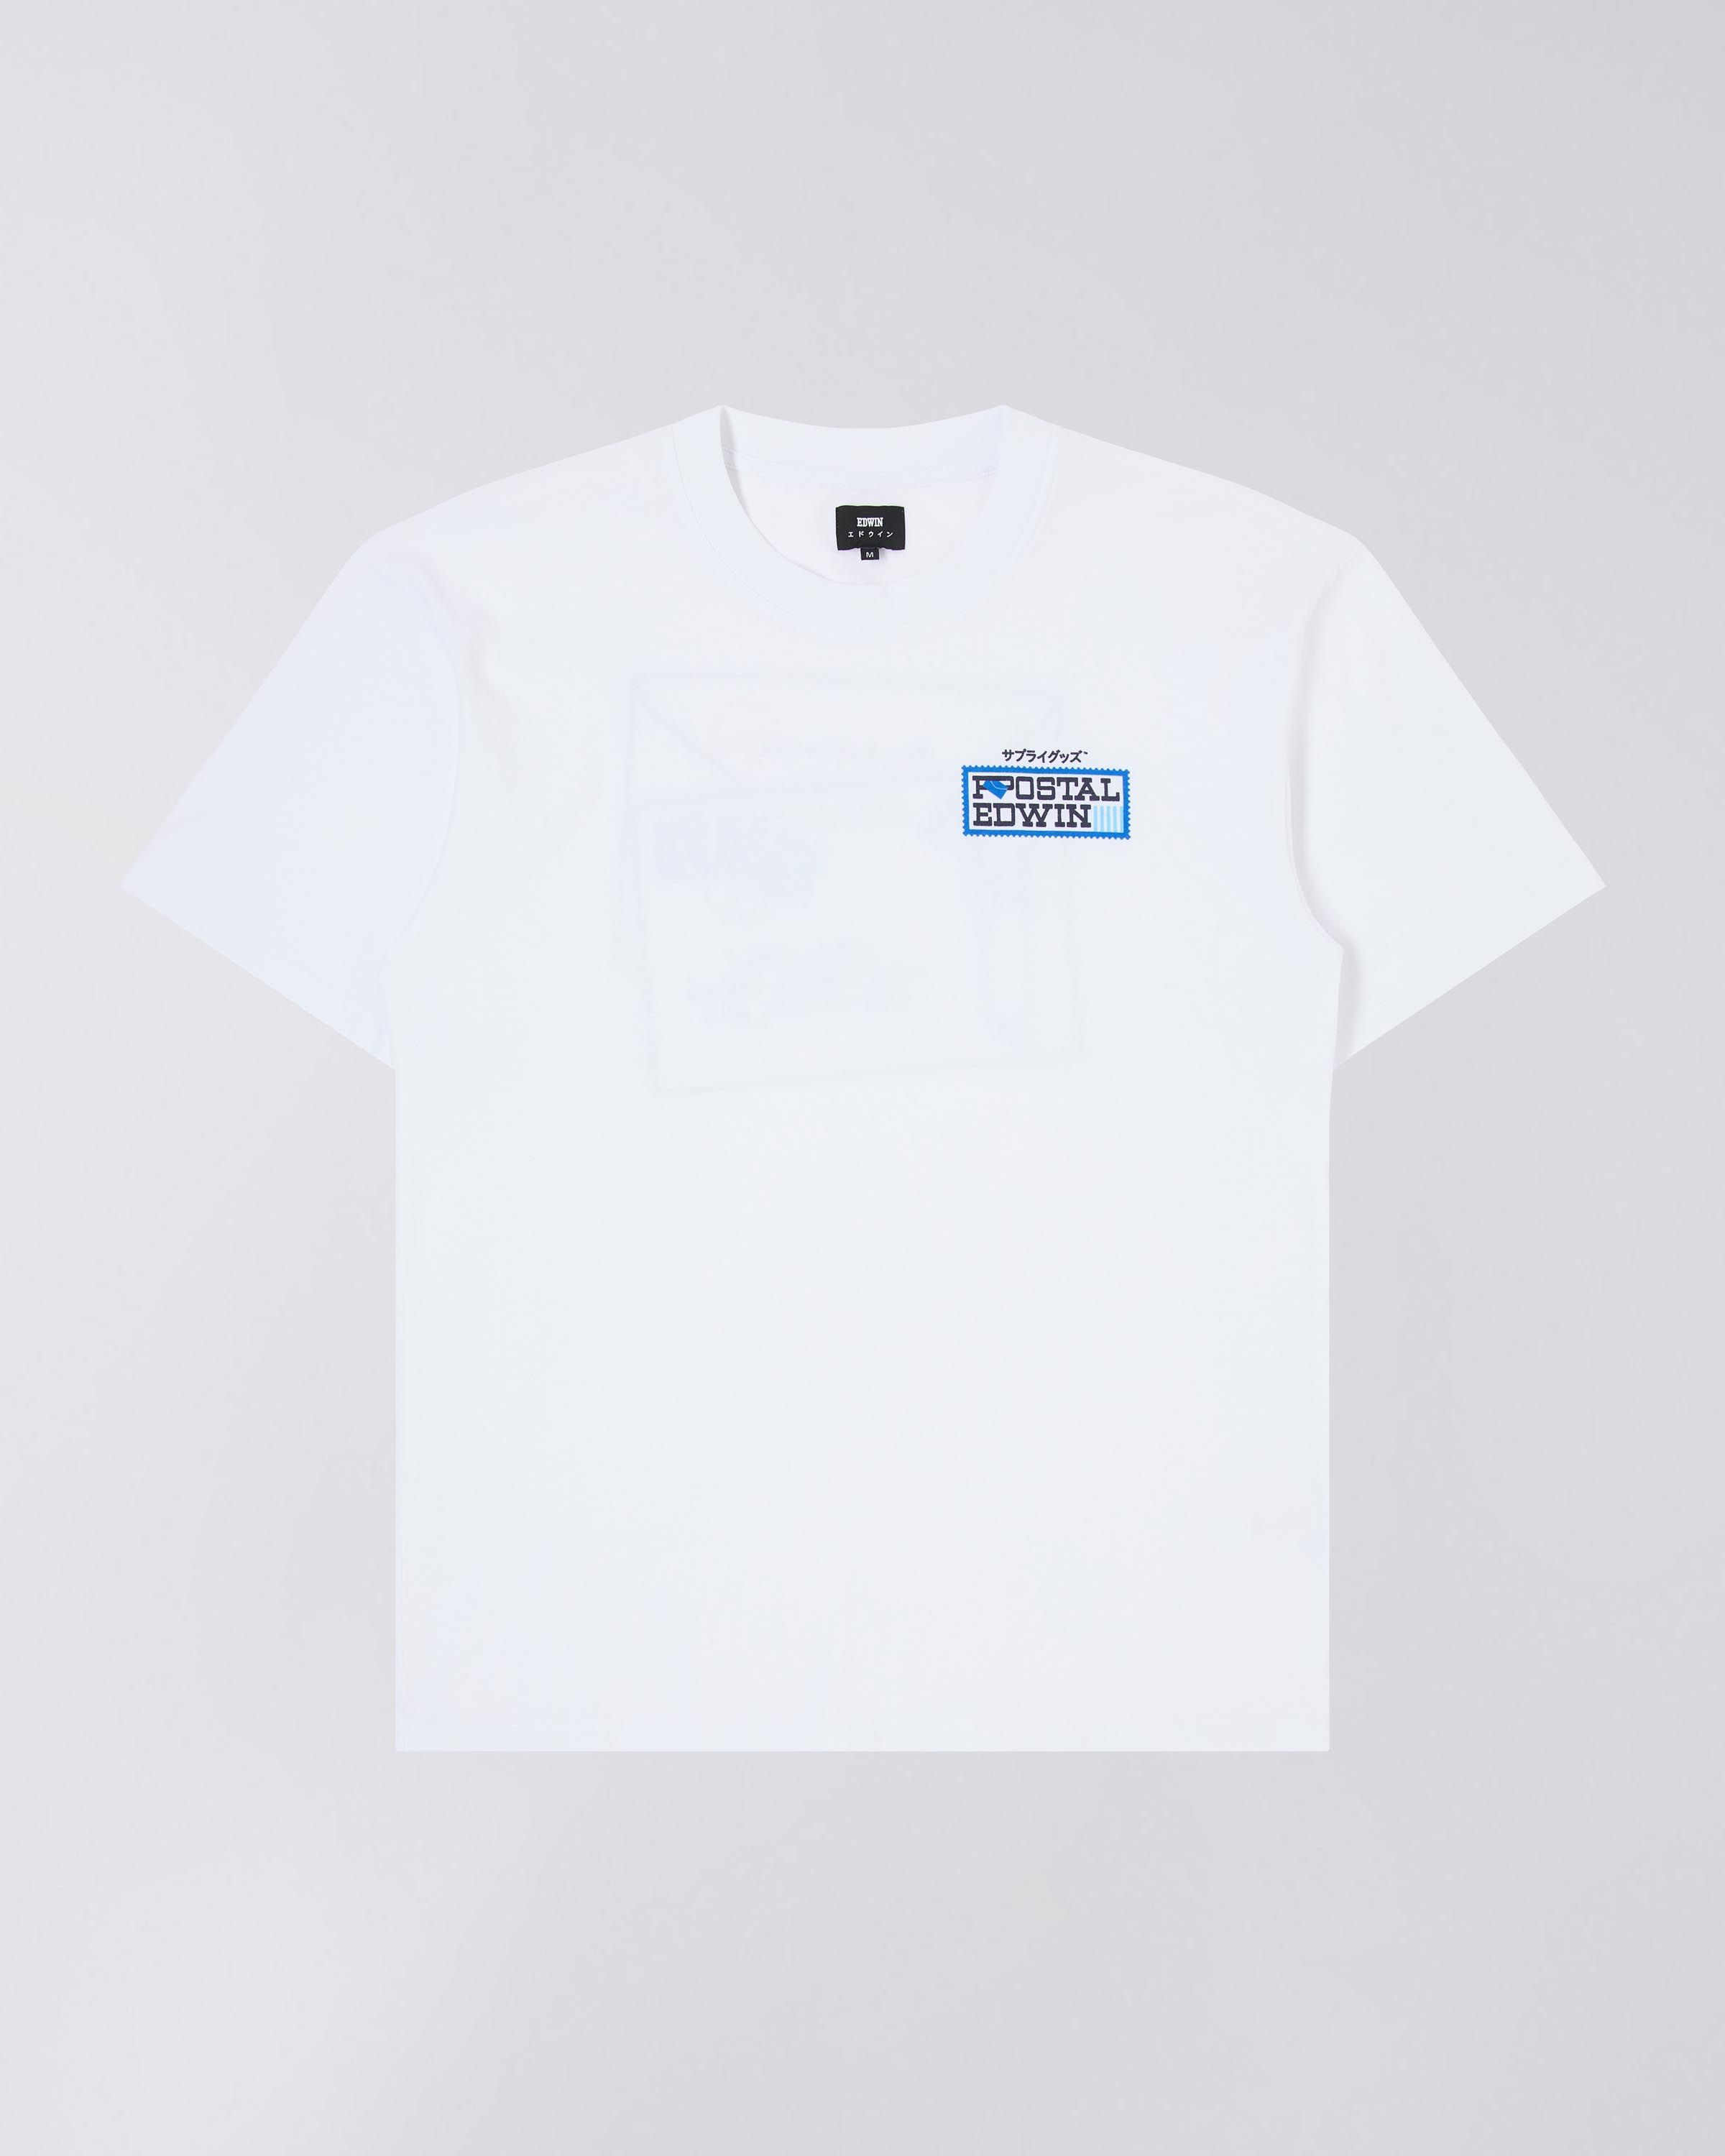 Postal T-Shirt